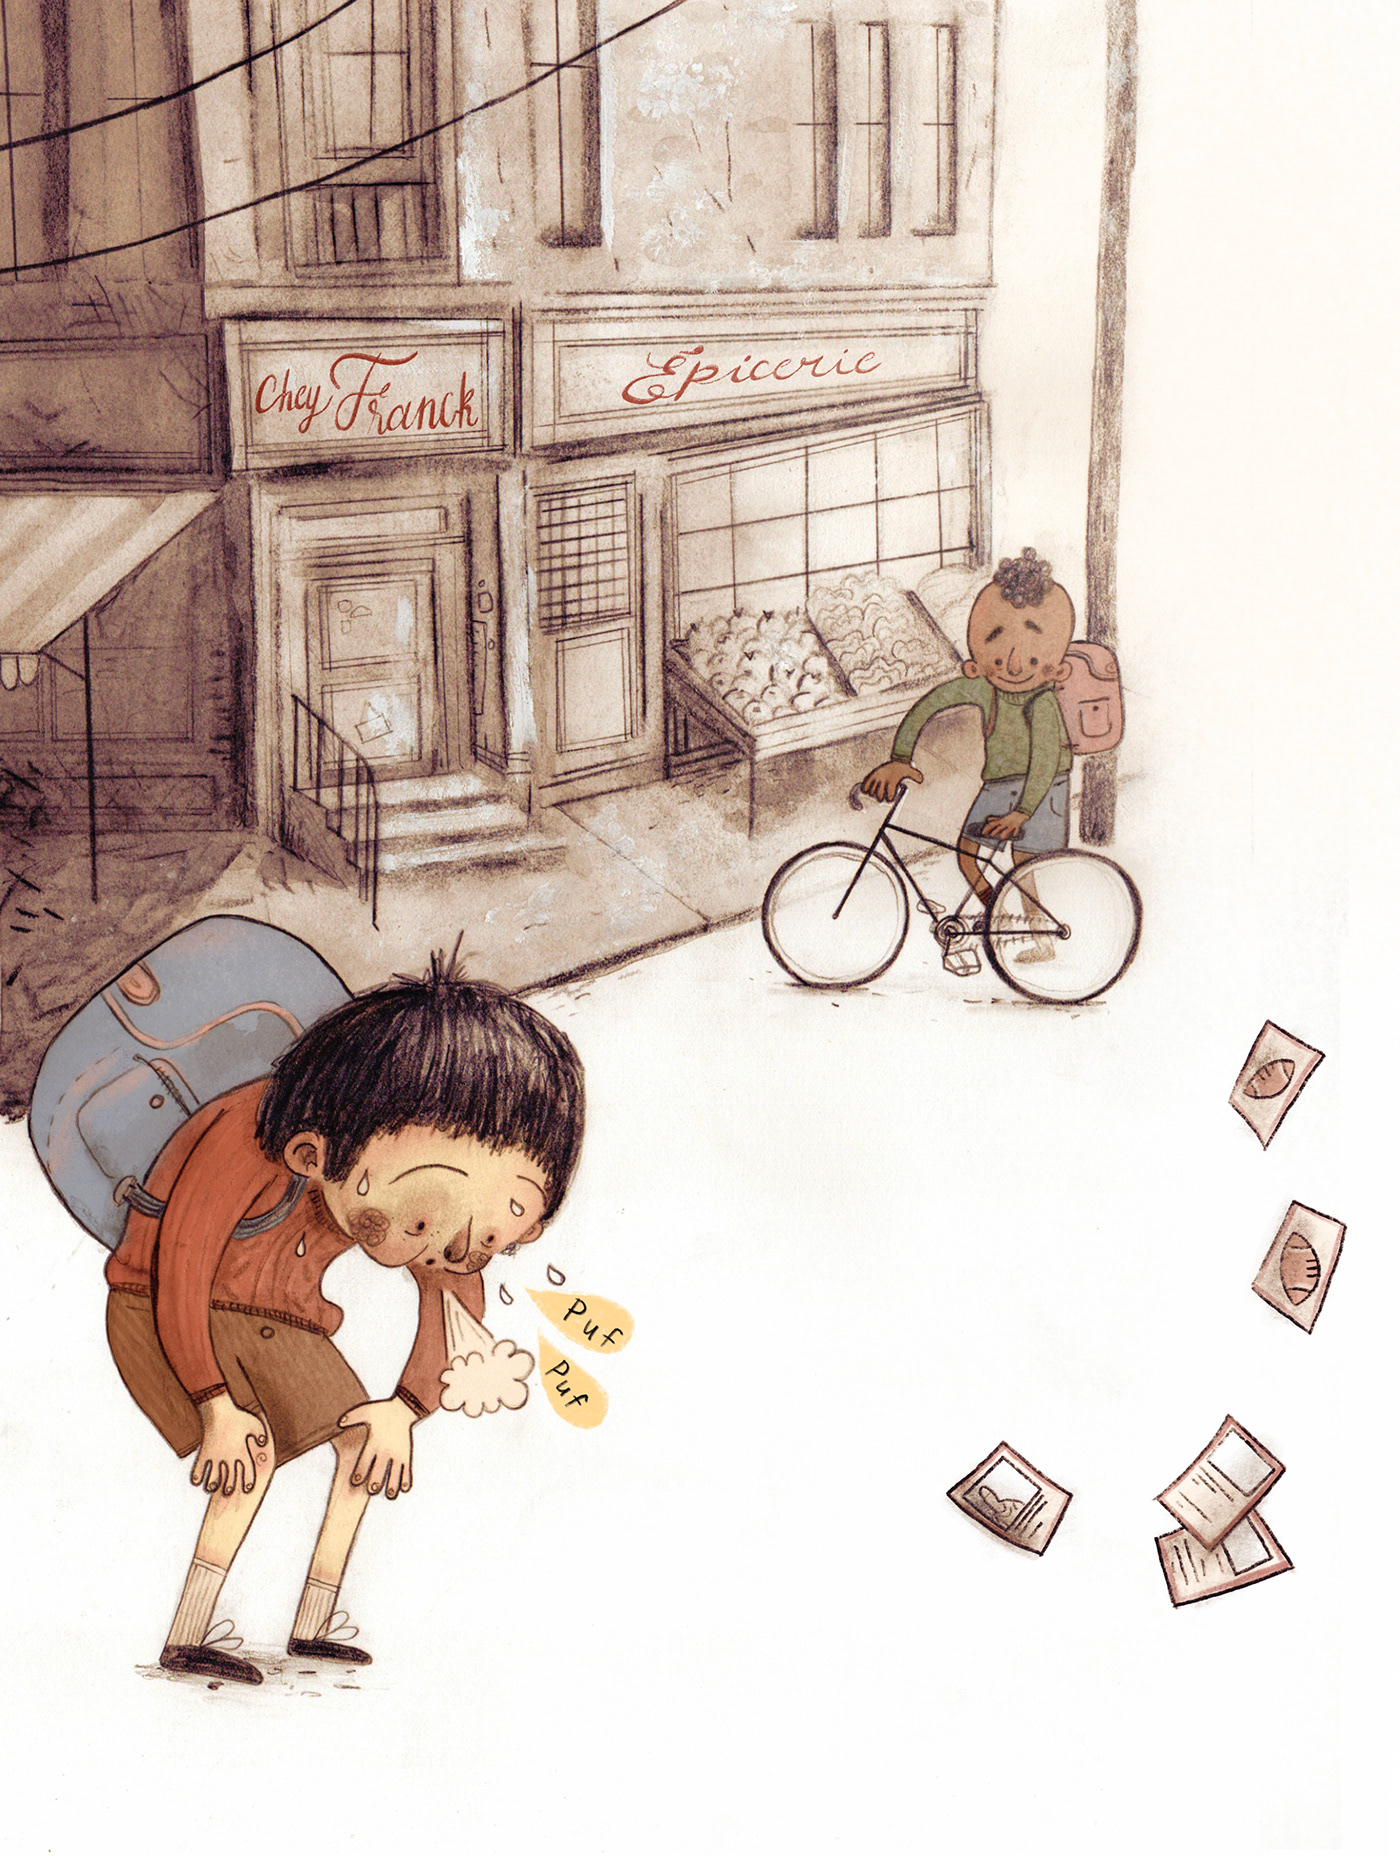 Bicycle kidlit children's illustration Picture book artwork